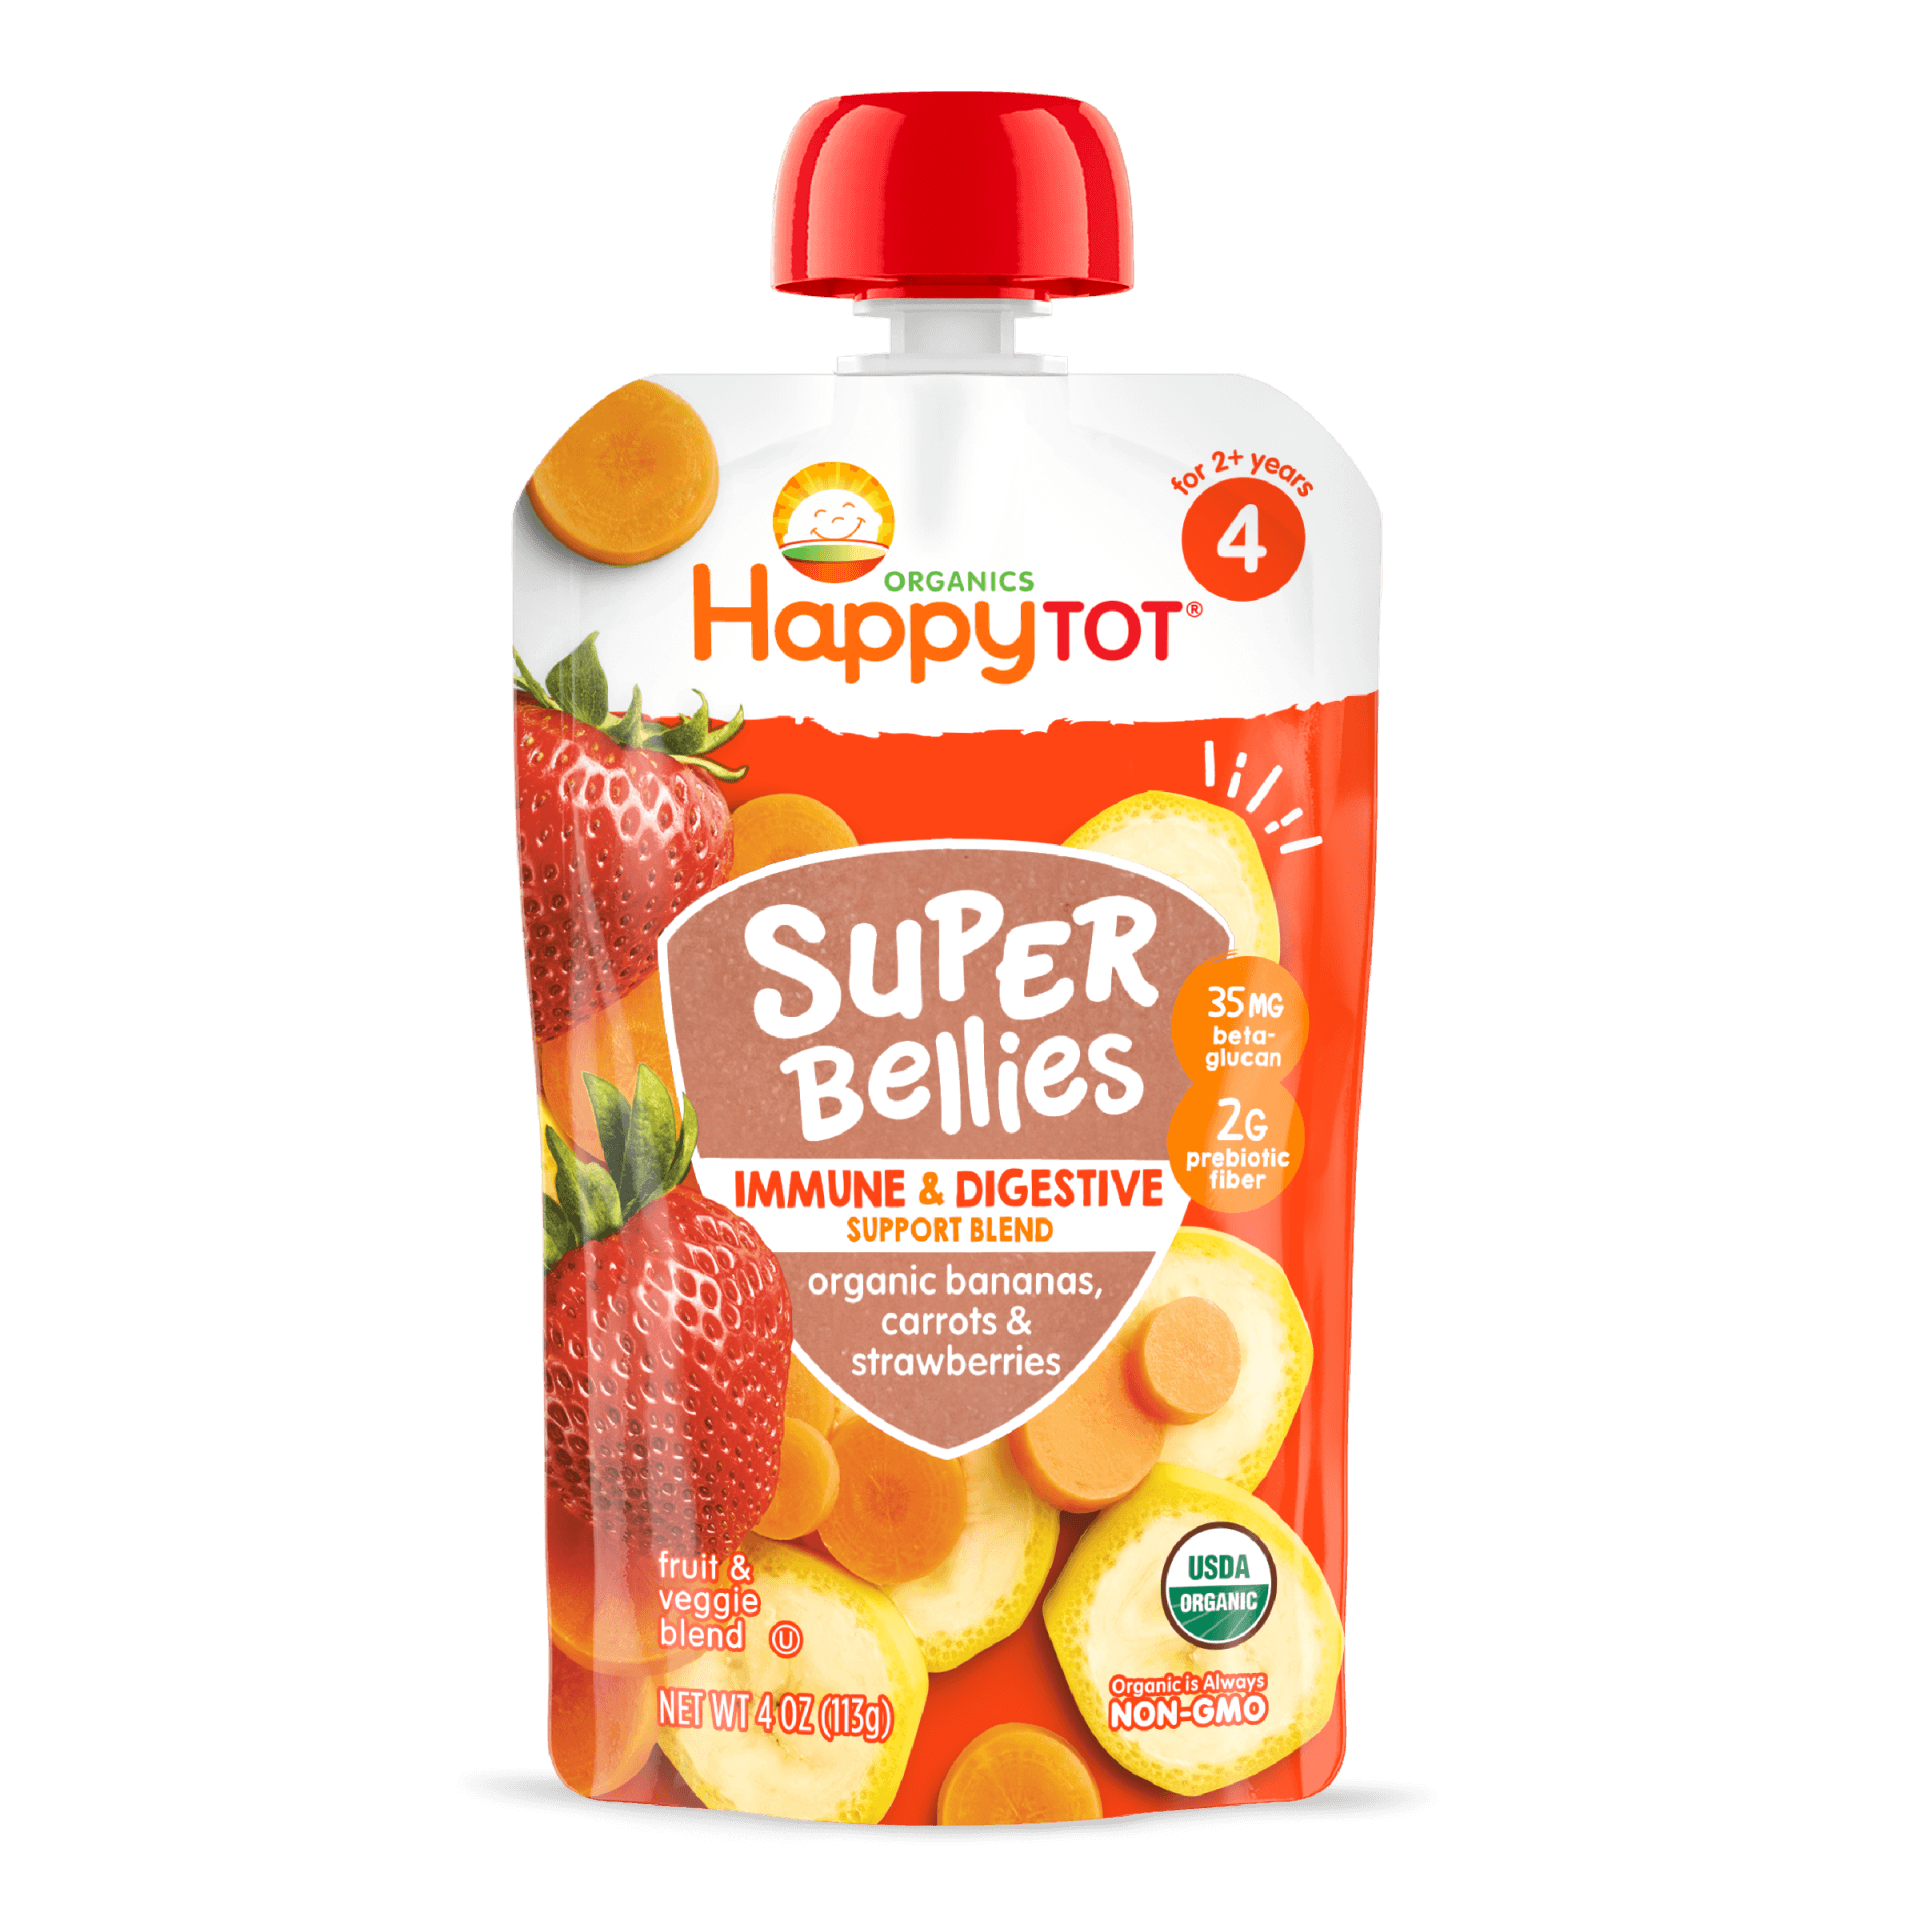 Happy Tot S4 - Super Bellies Organic Bananas Carrots & Strawberries 4Oz pouch 16 units per case 4.0 oz